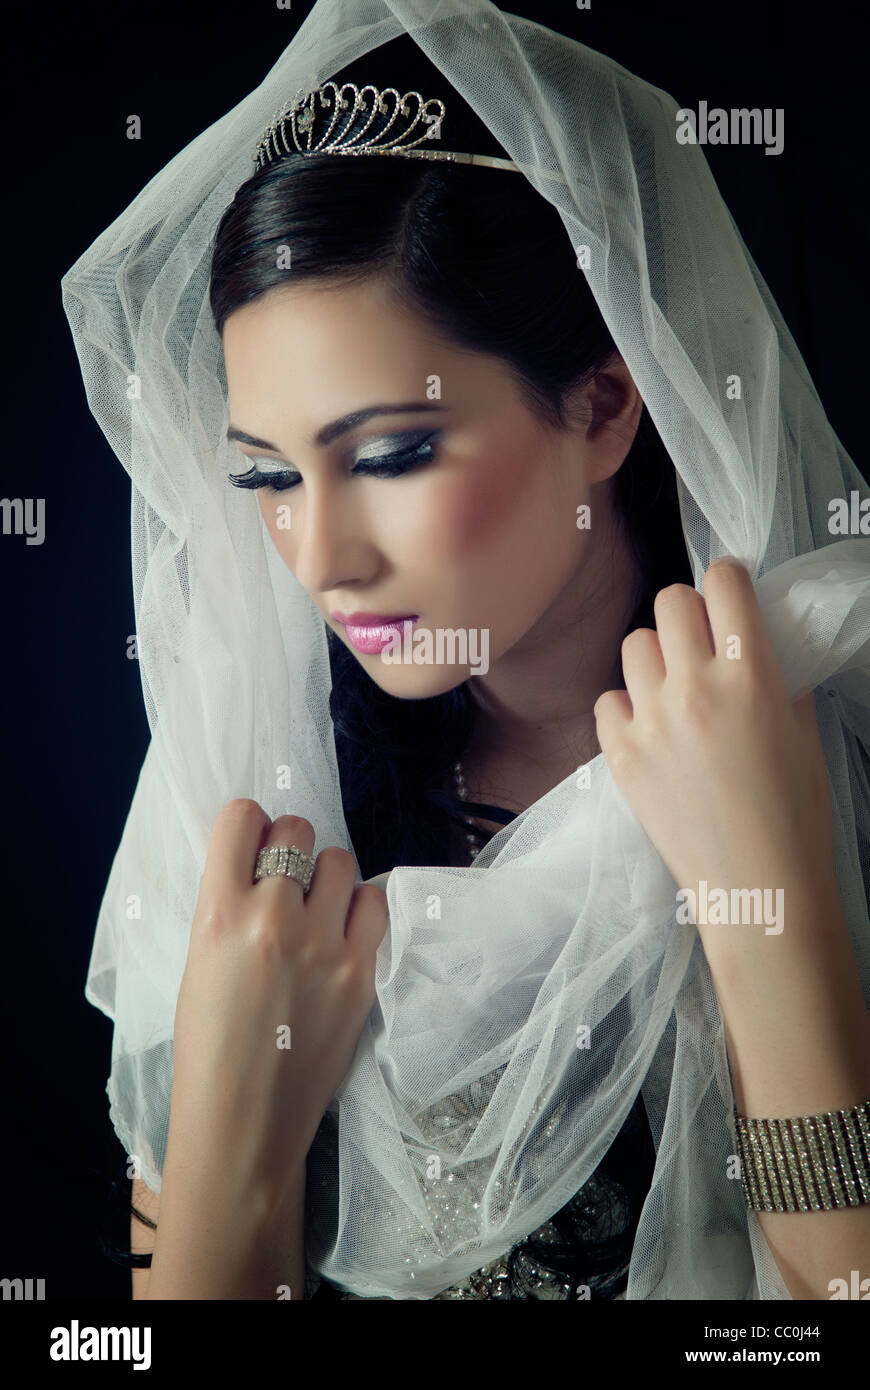 Beautiful Asian bride Stock Photo - Alamy